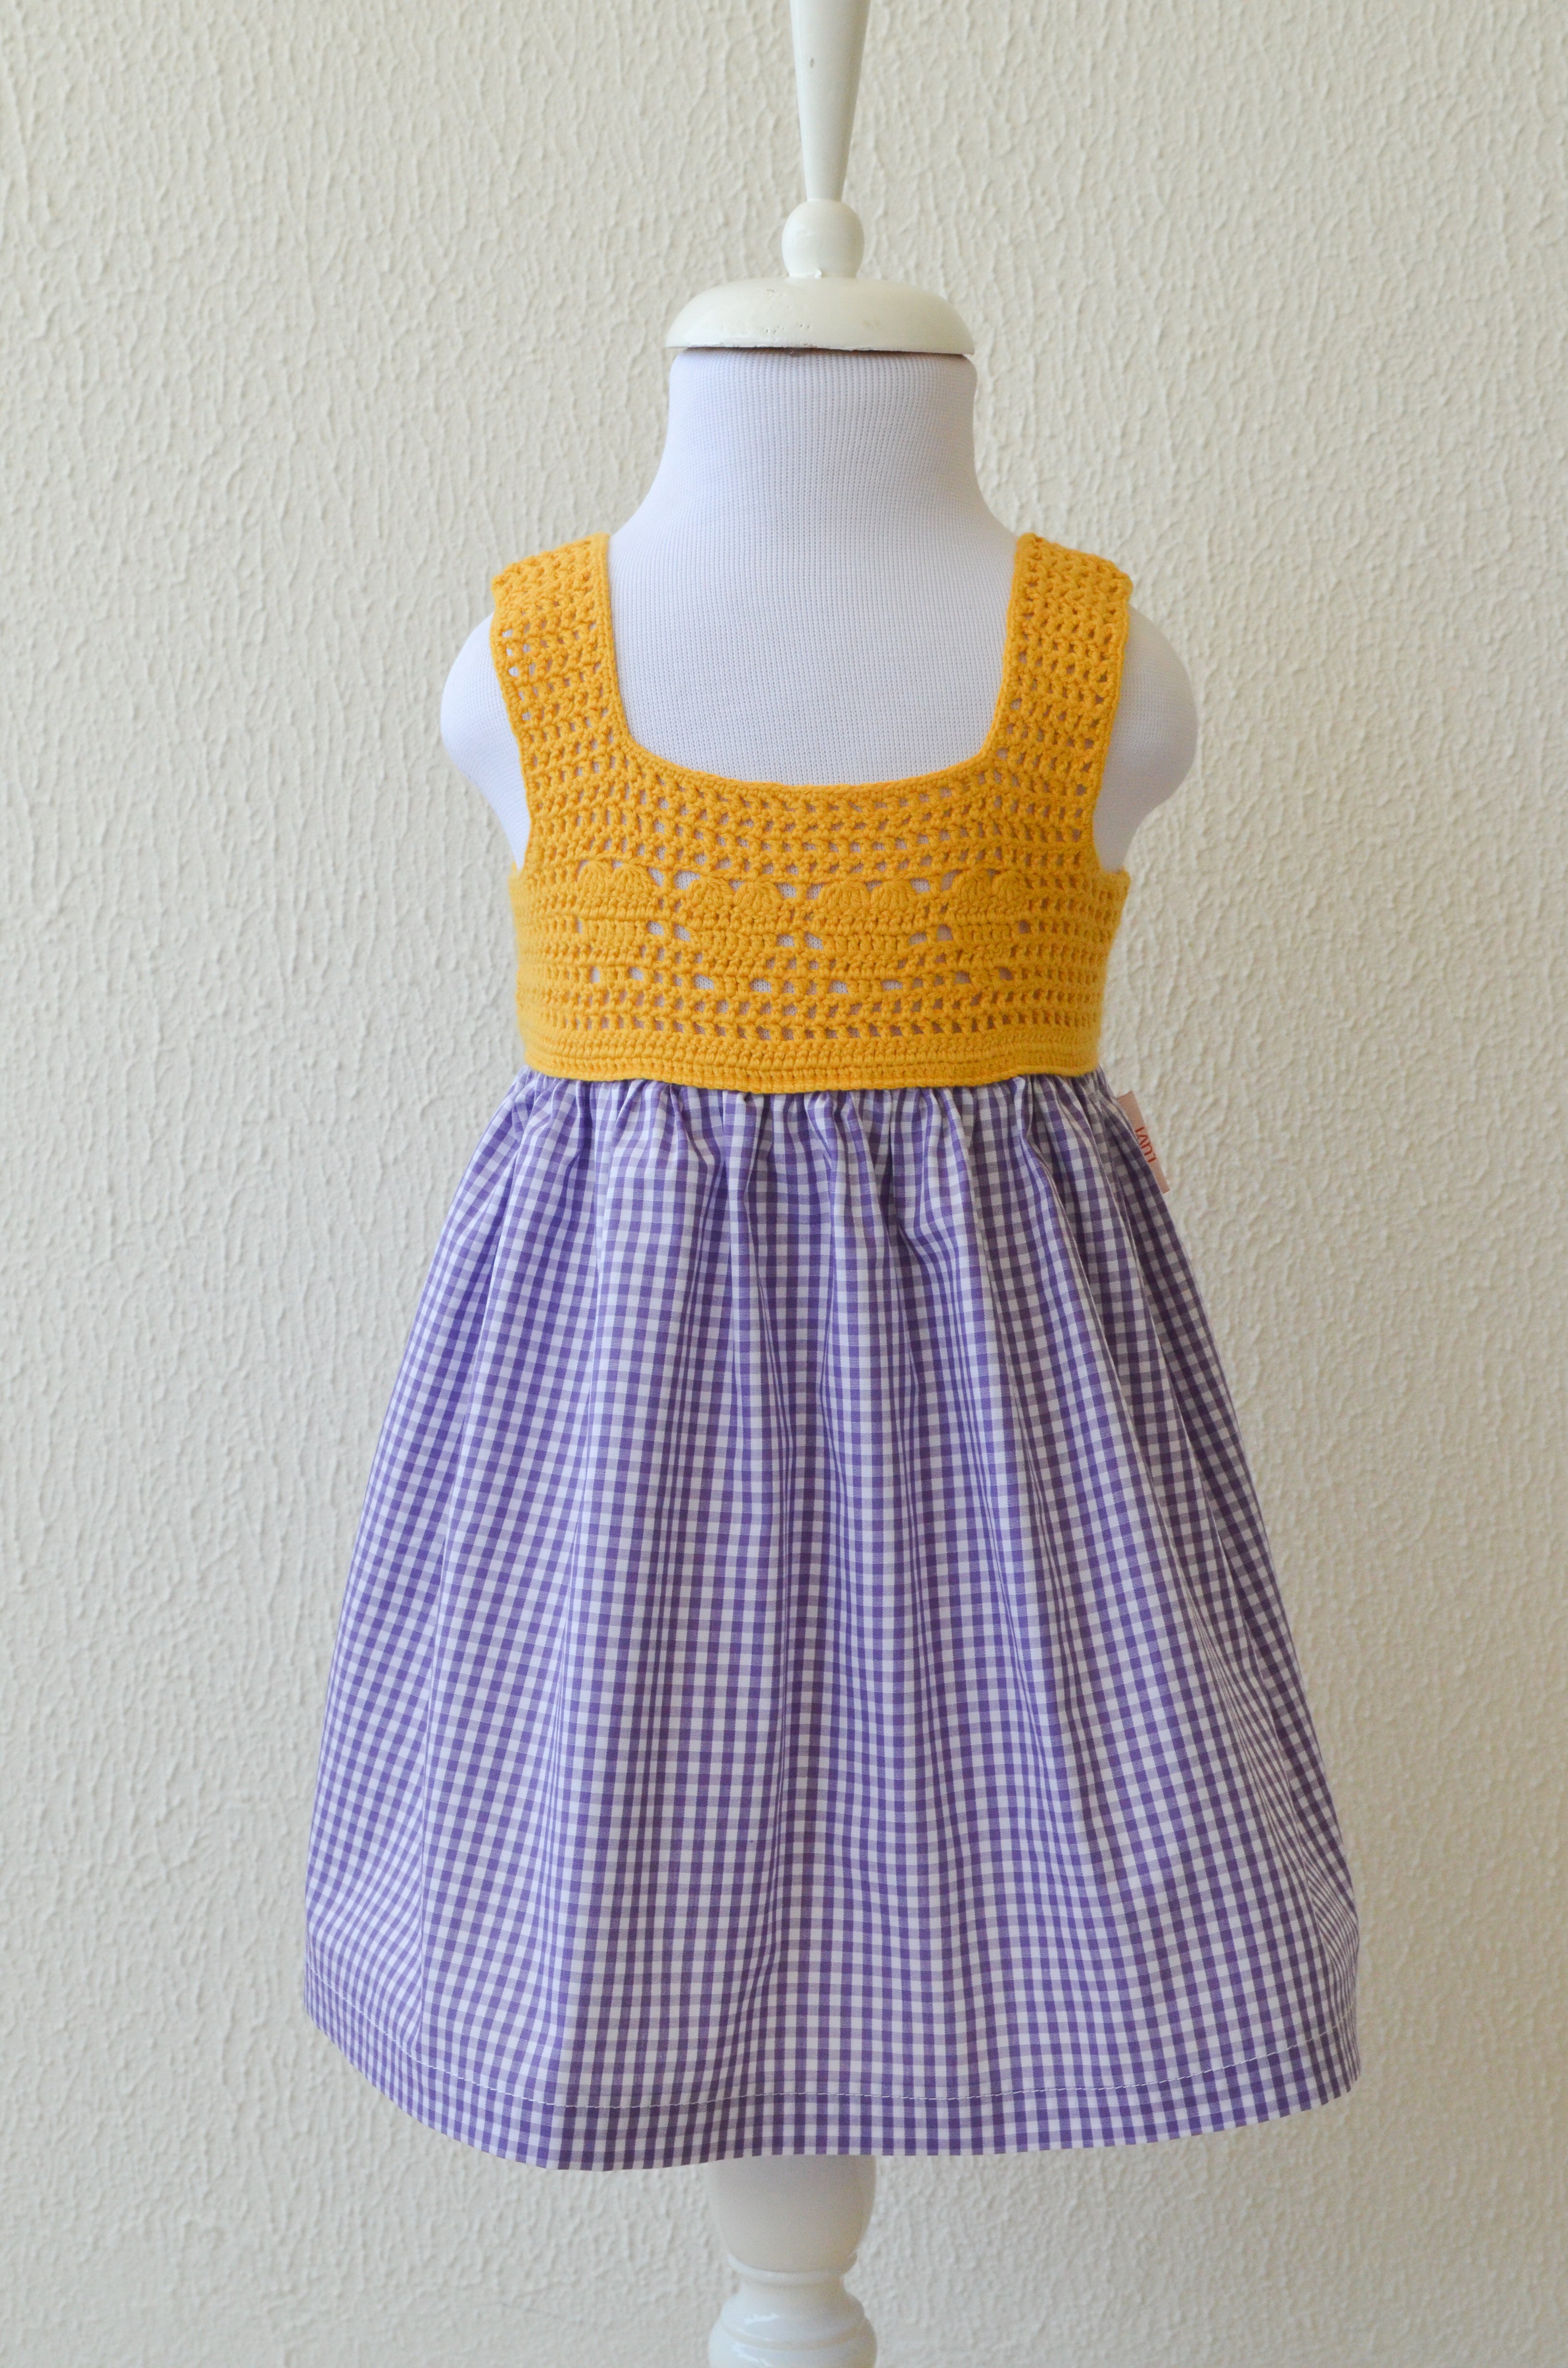 girls purple gingham school dress